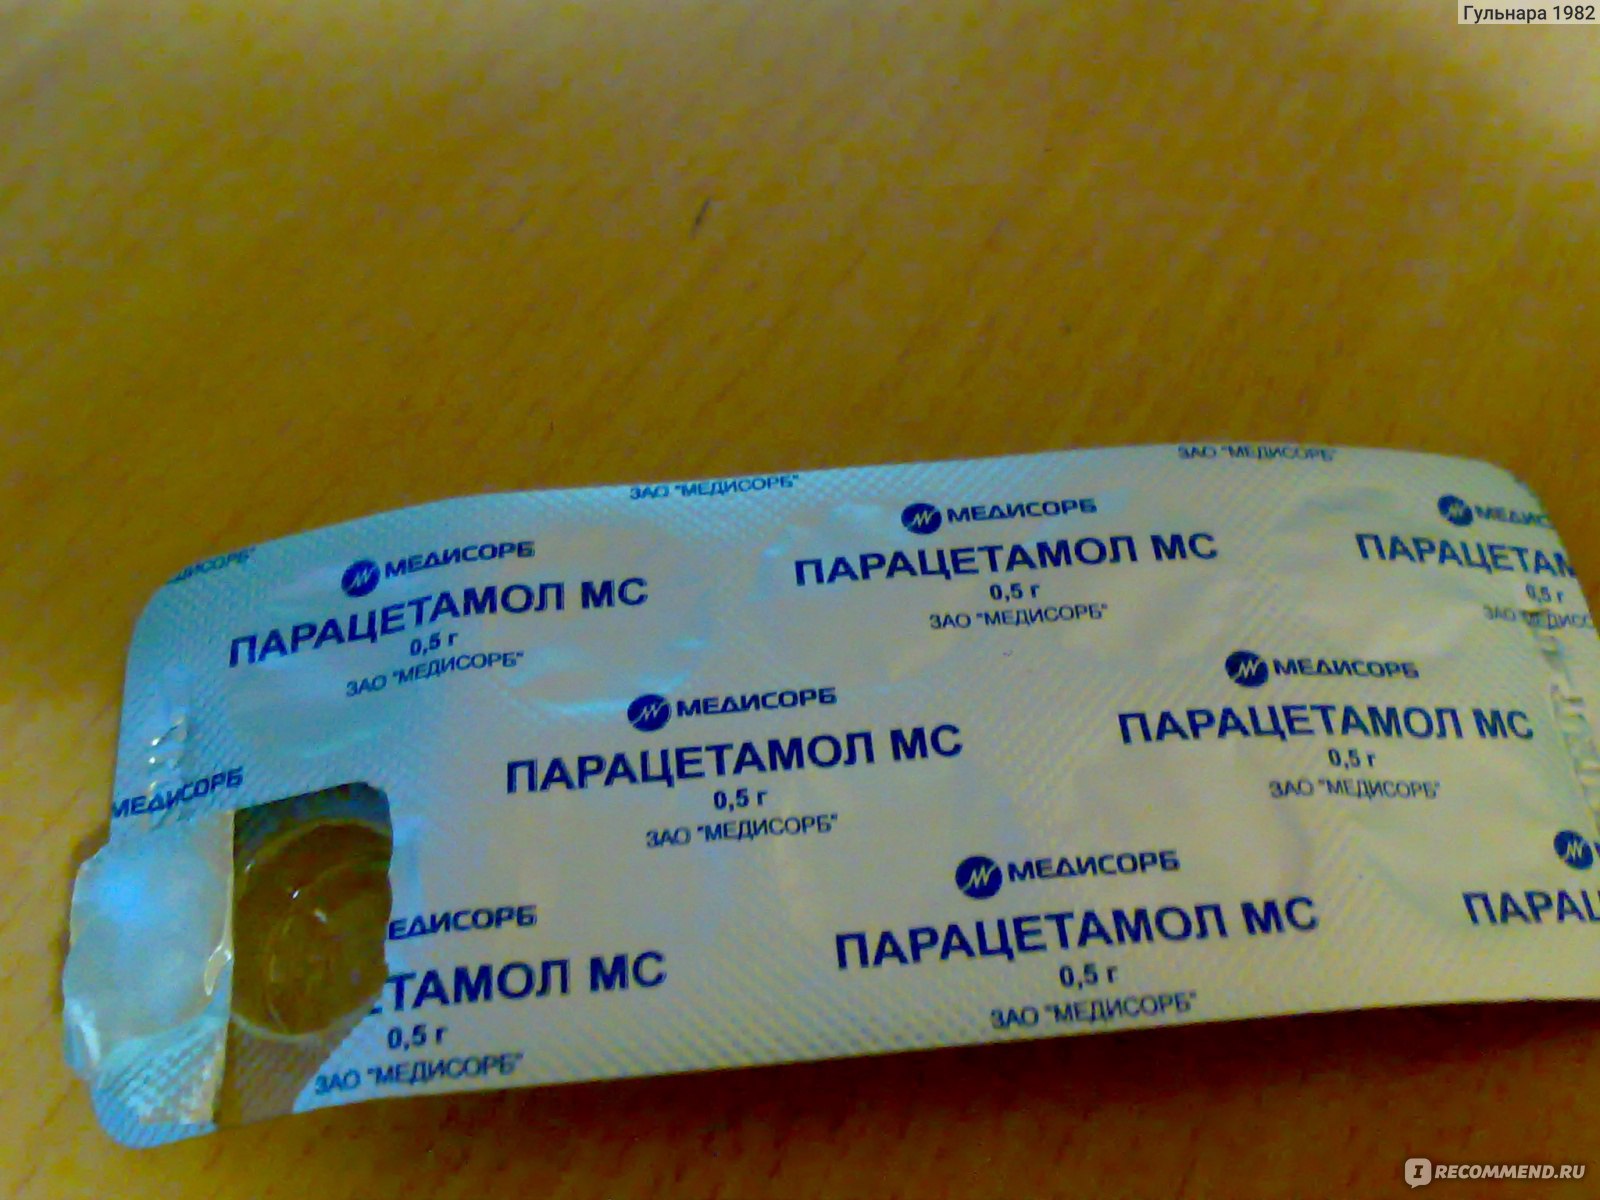 Таблетки Медисорб Парацетамол МС 500 мг - «неплохие» | отзывы